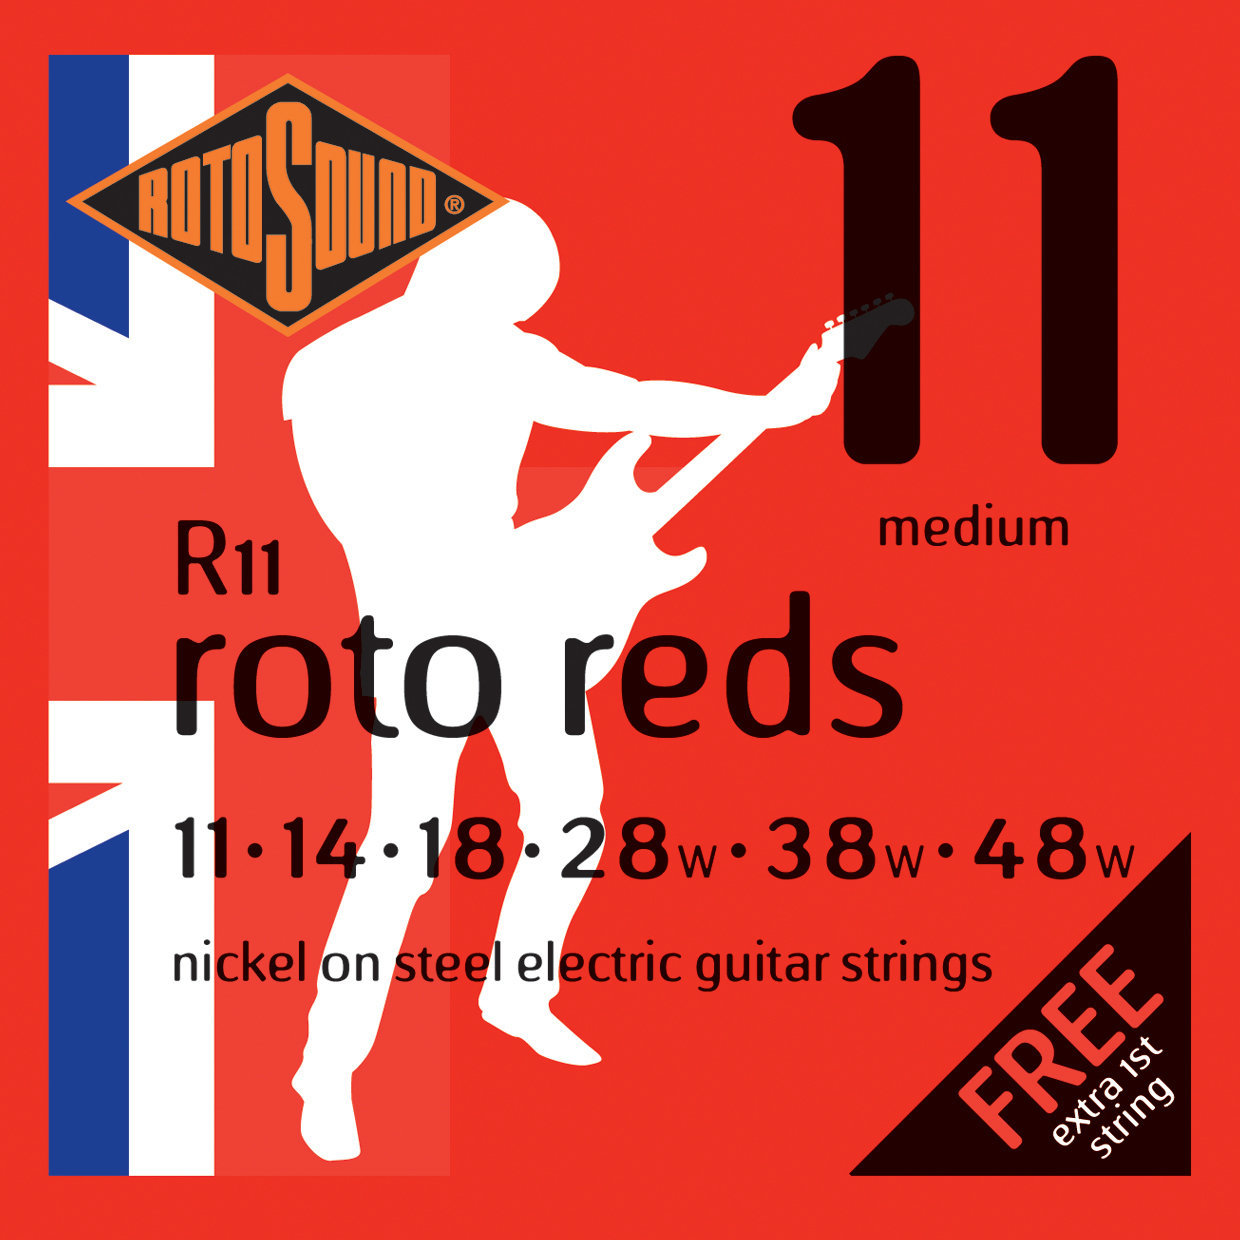 Saiten für E-Gitarre Rotosound R11